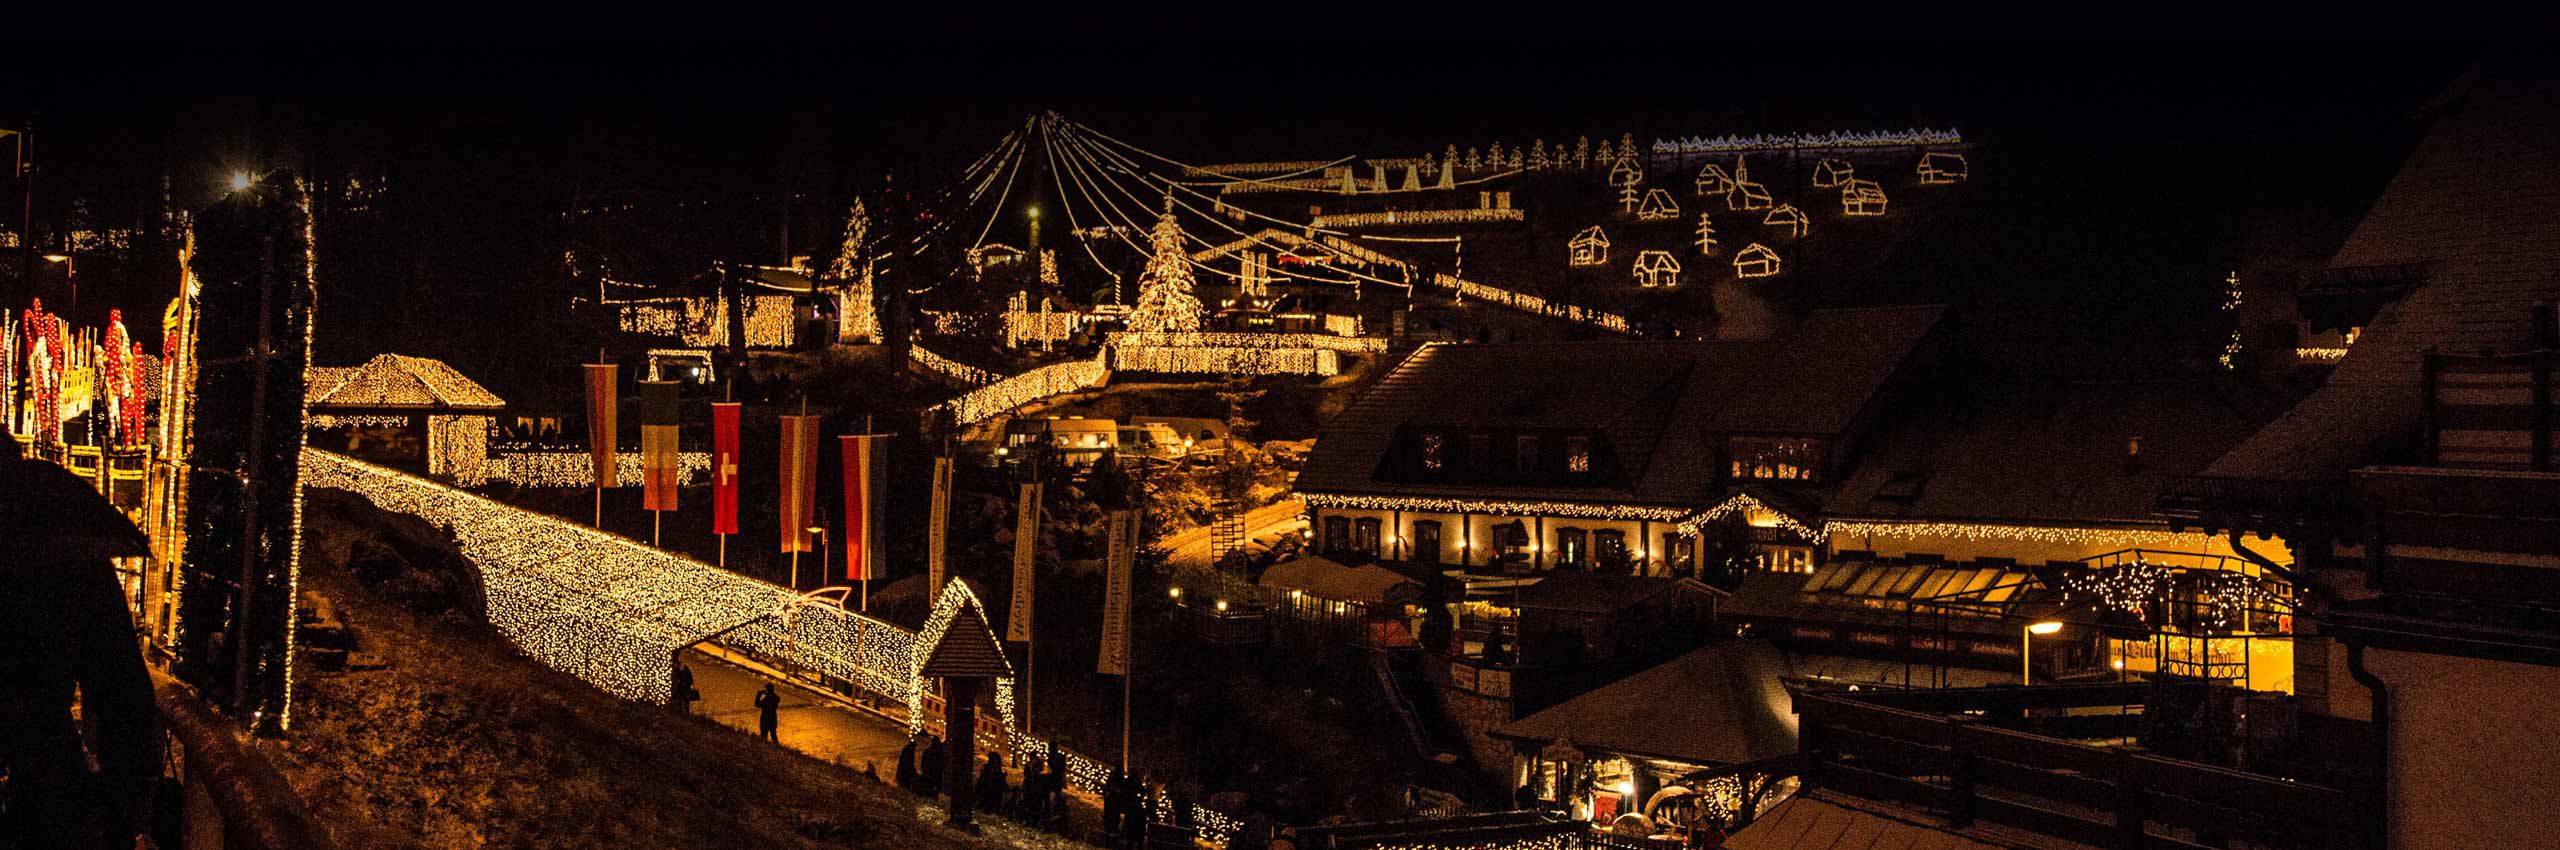 Triberg Winter Magic - image by TWZ-Event-GmbH